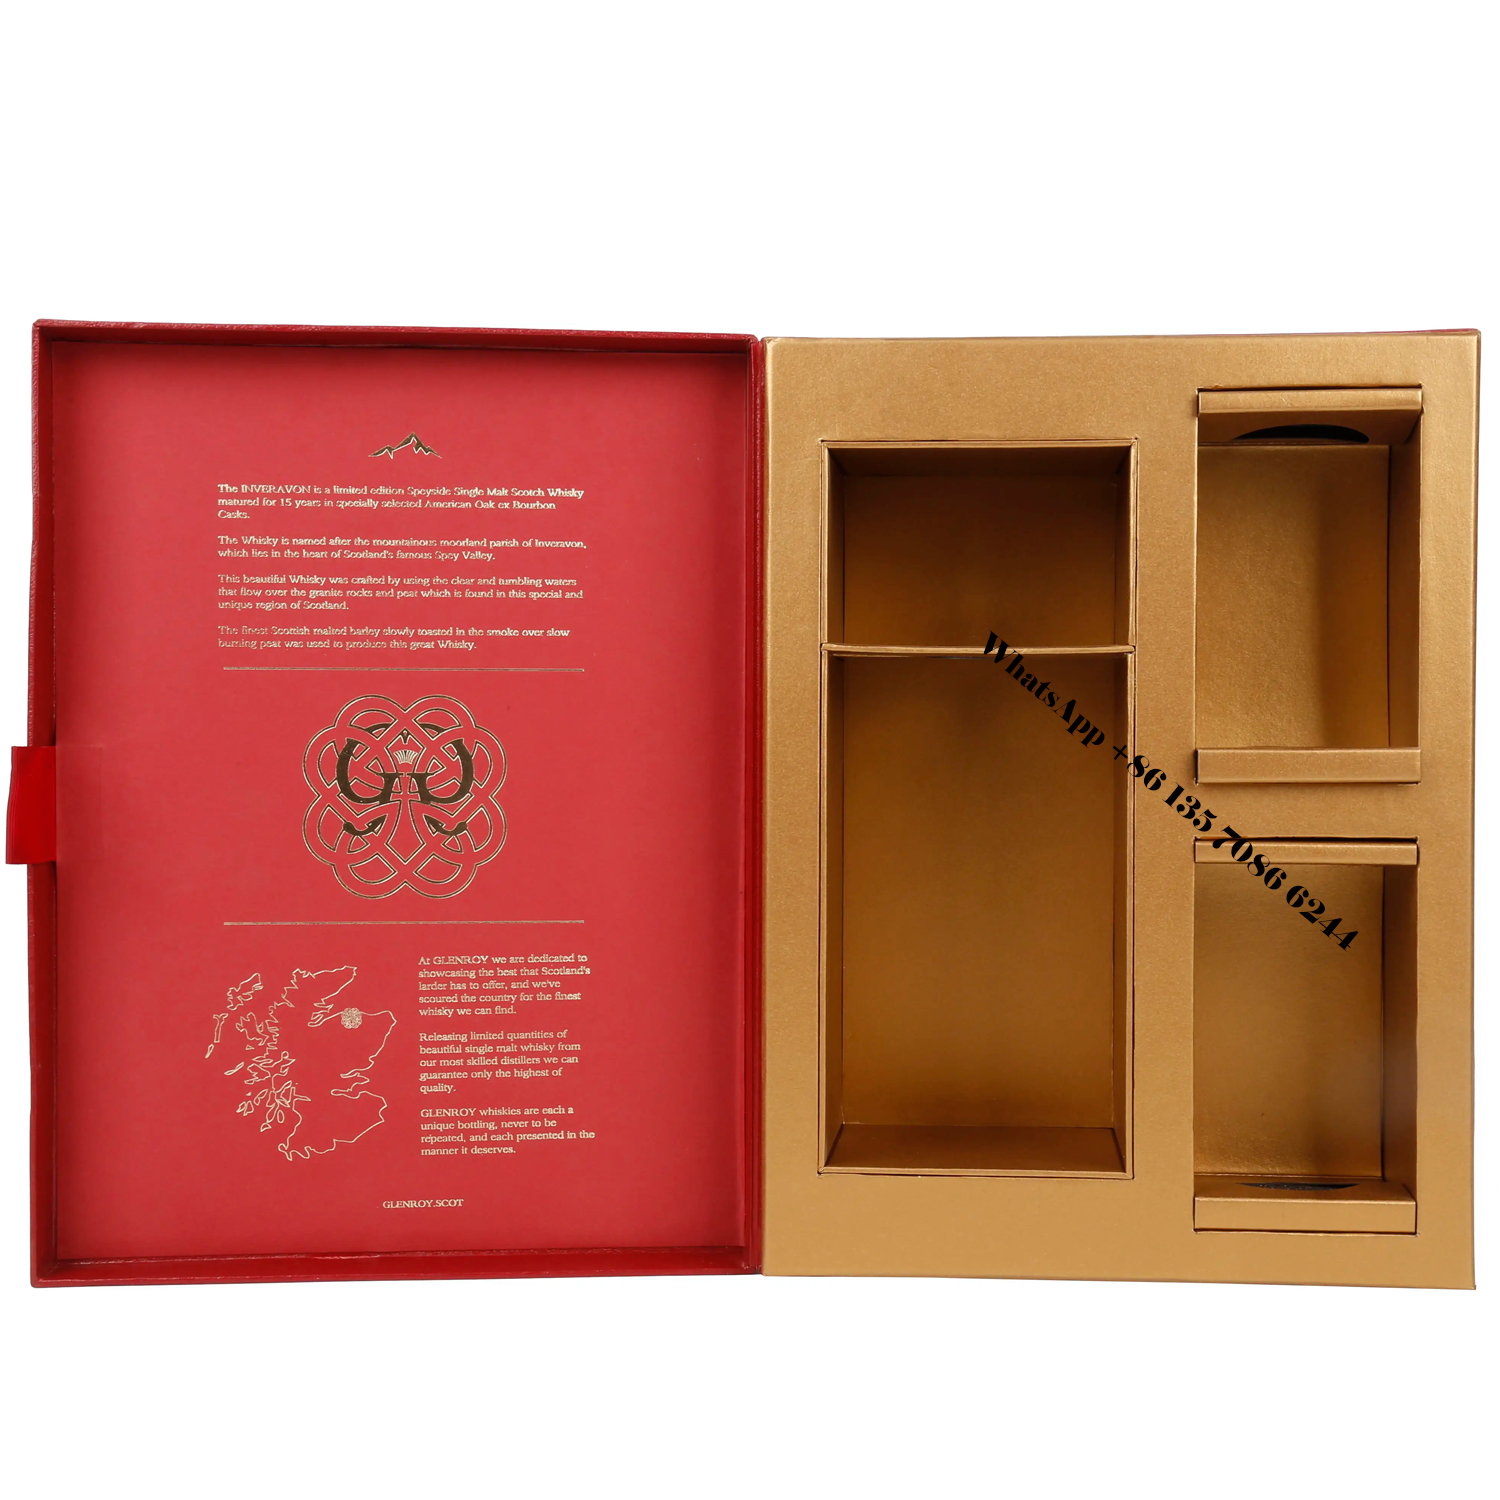  Custom Luxury Magnetic Closure Whisky Gift Box Packaging  